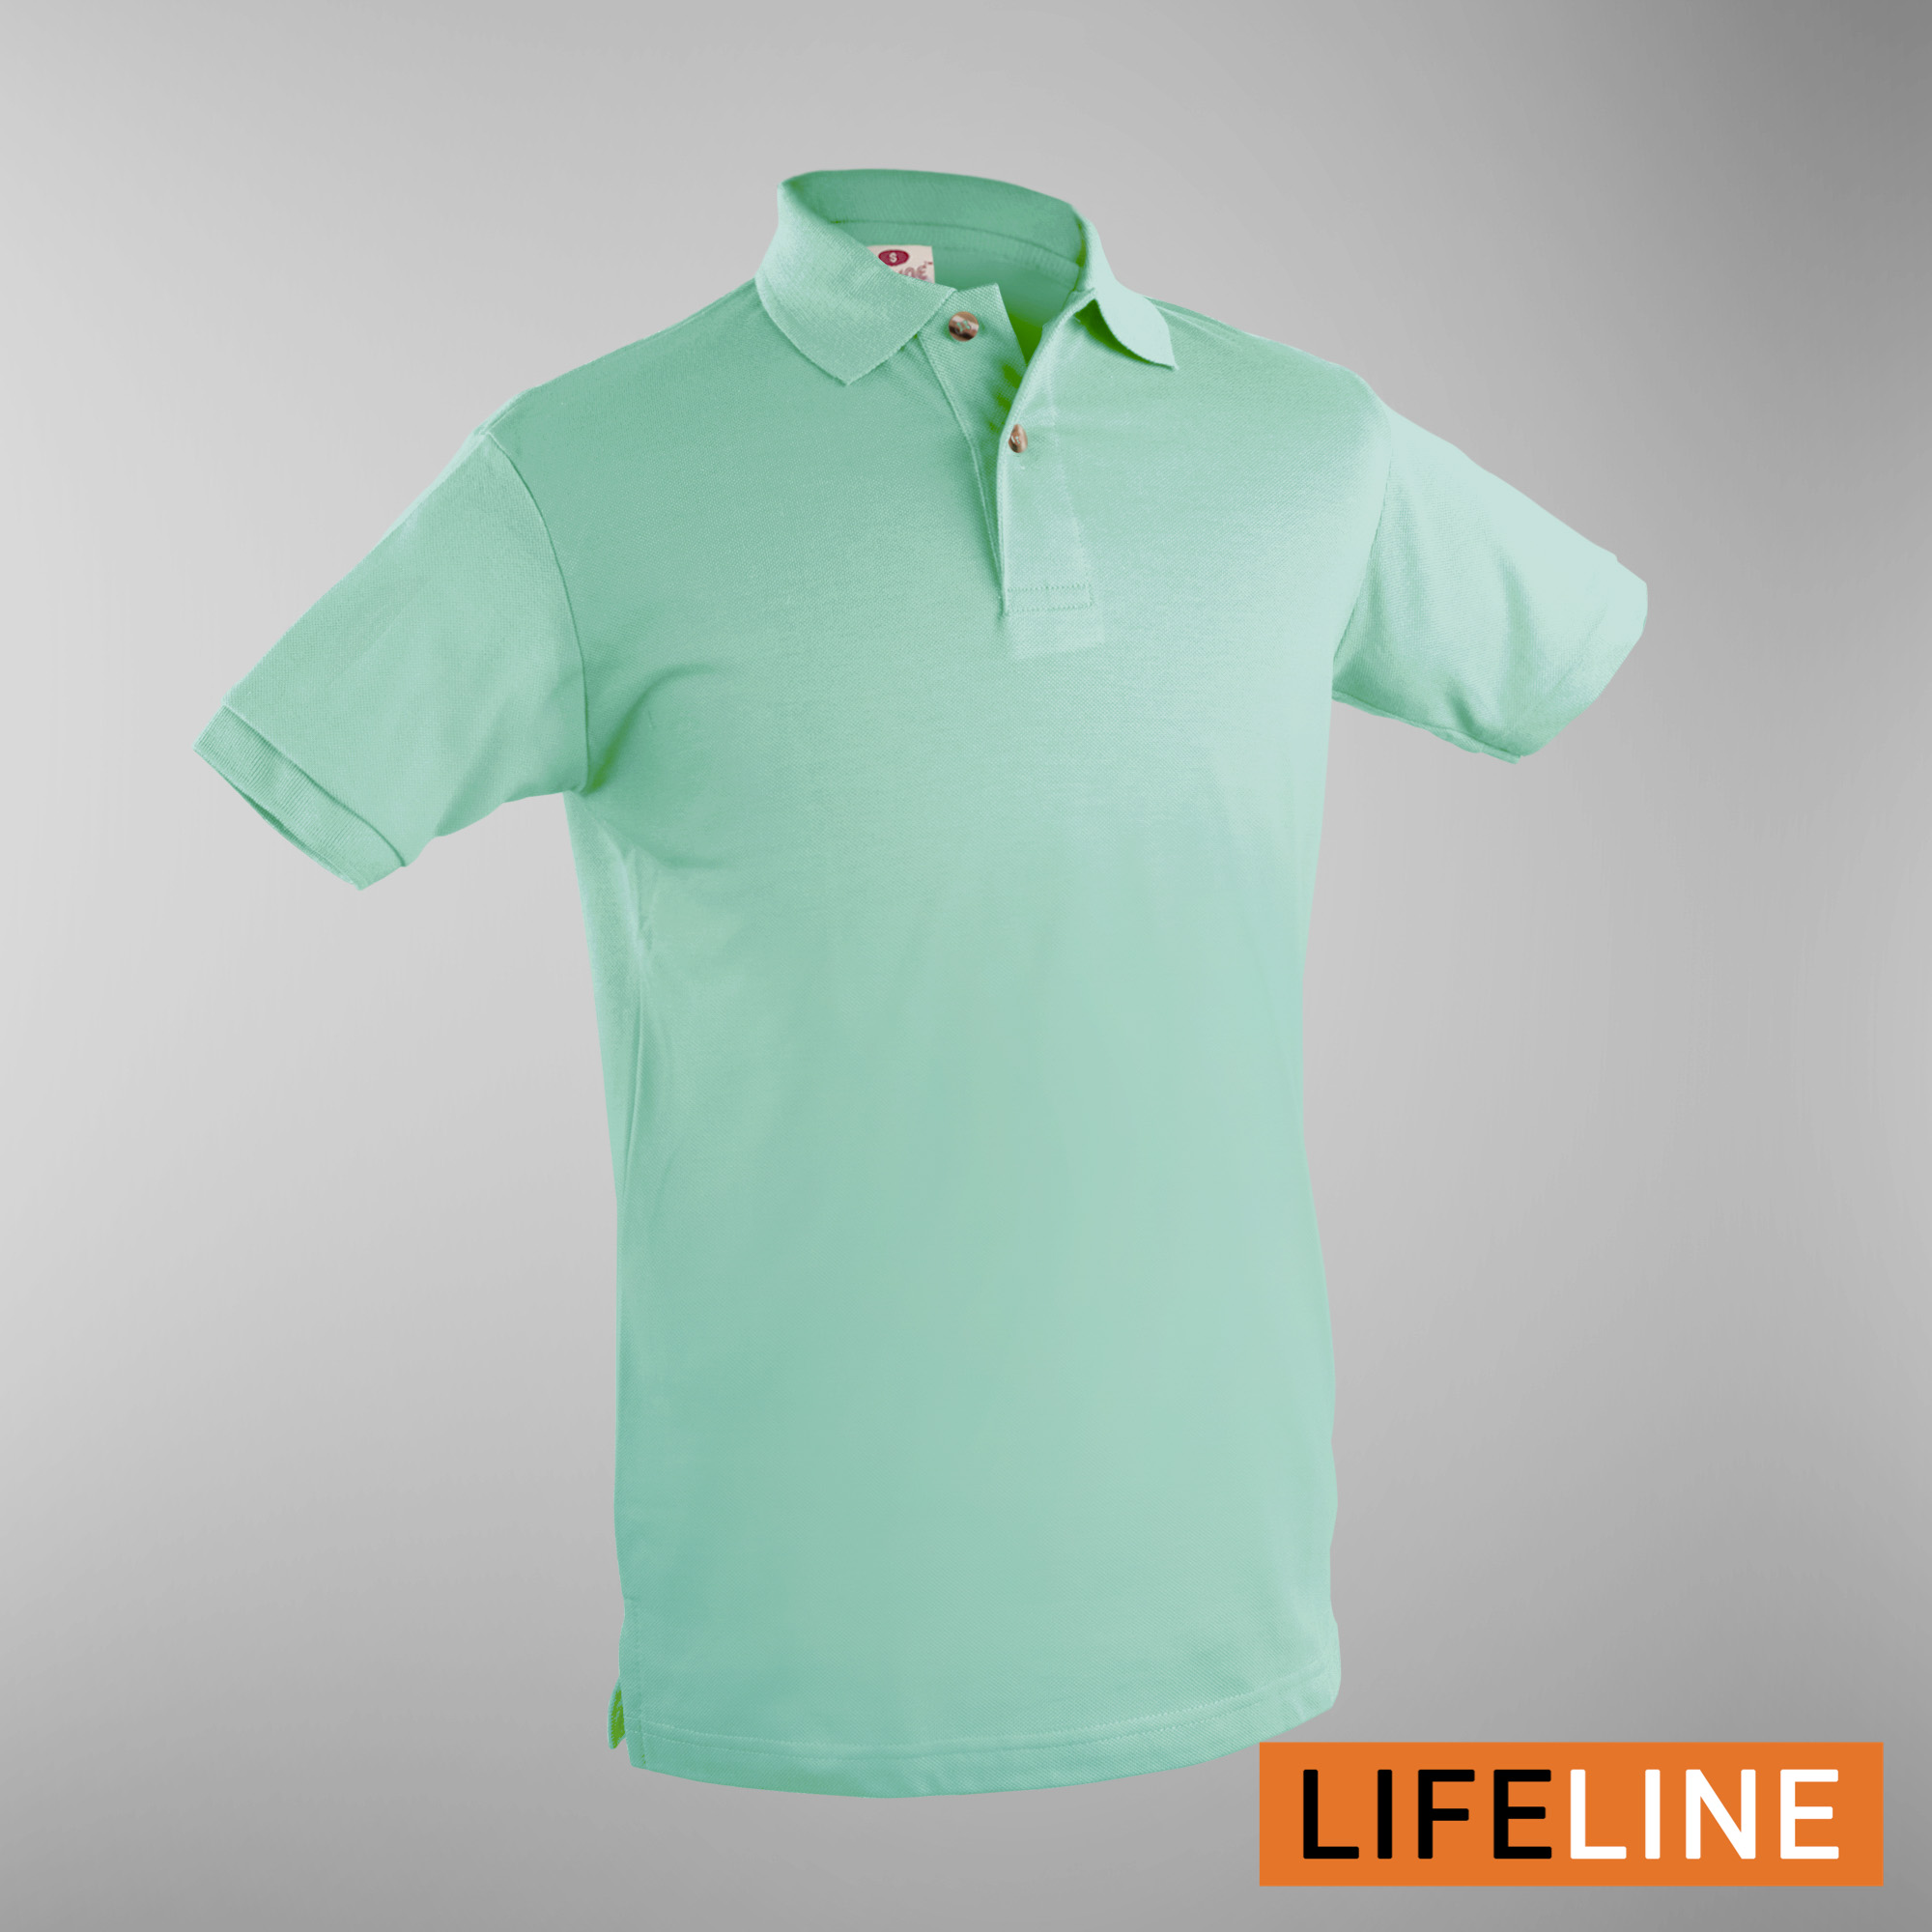 Lifeline Men’s Poloshirt (Misty Green)